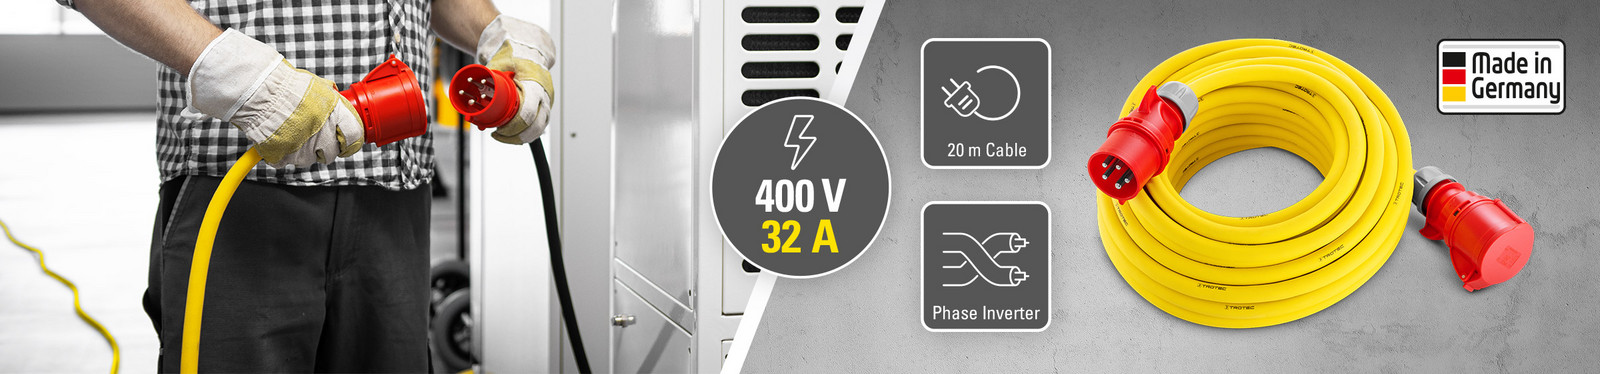 Profesyonel uzatma kablosu 400 V (32 A) – Made in Germany